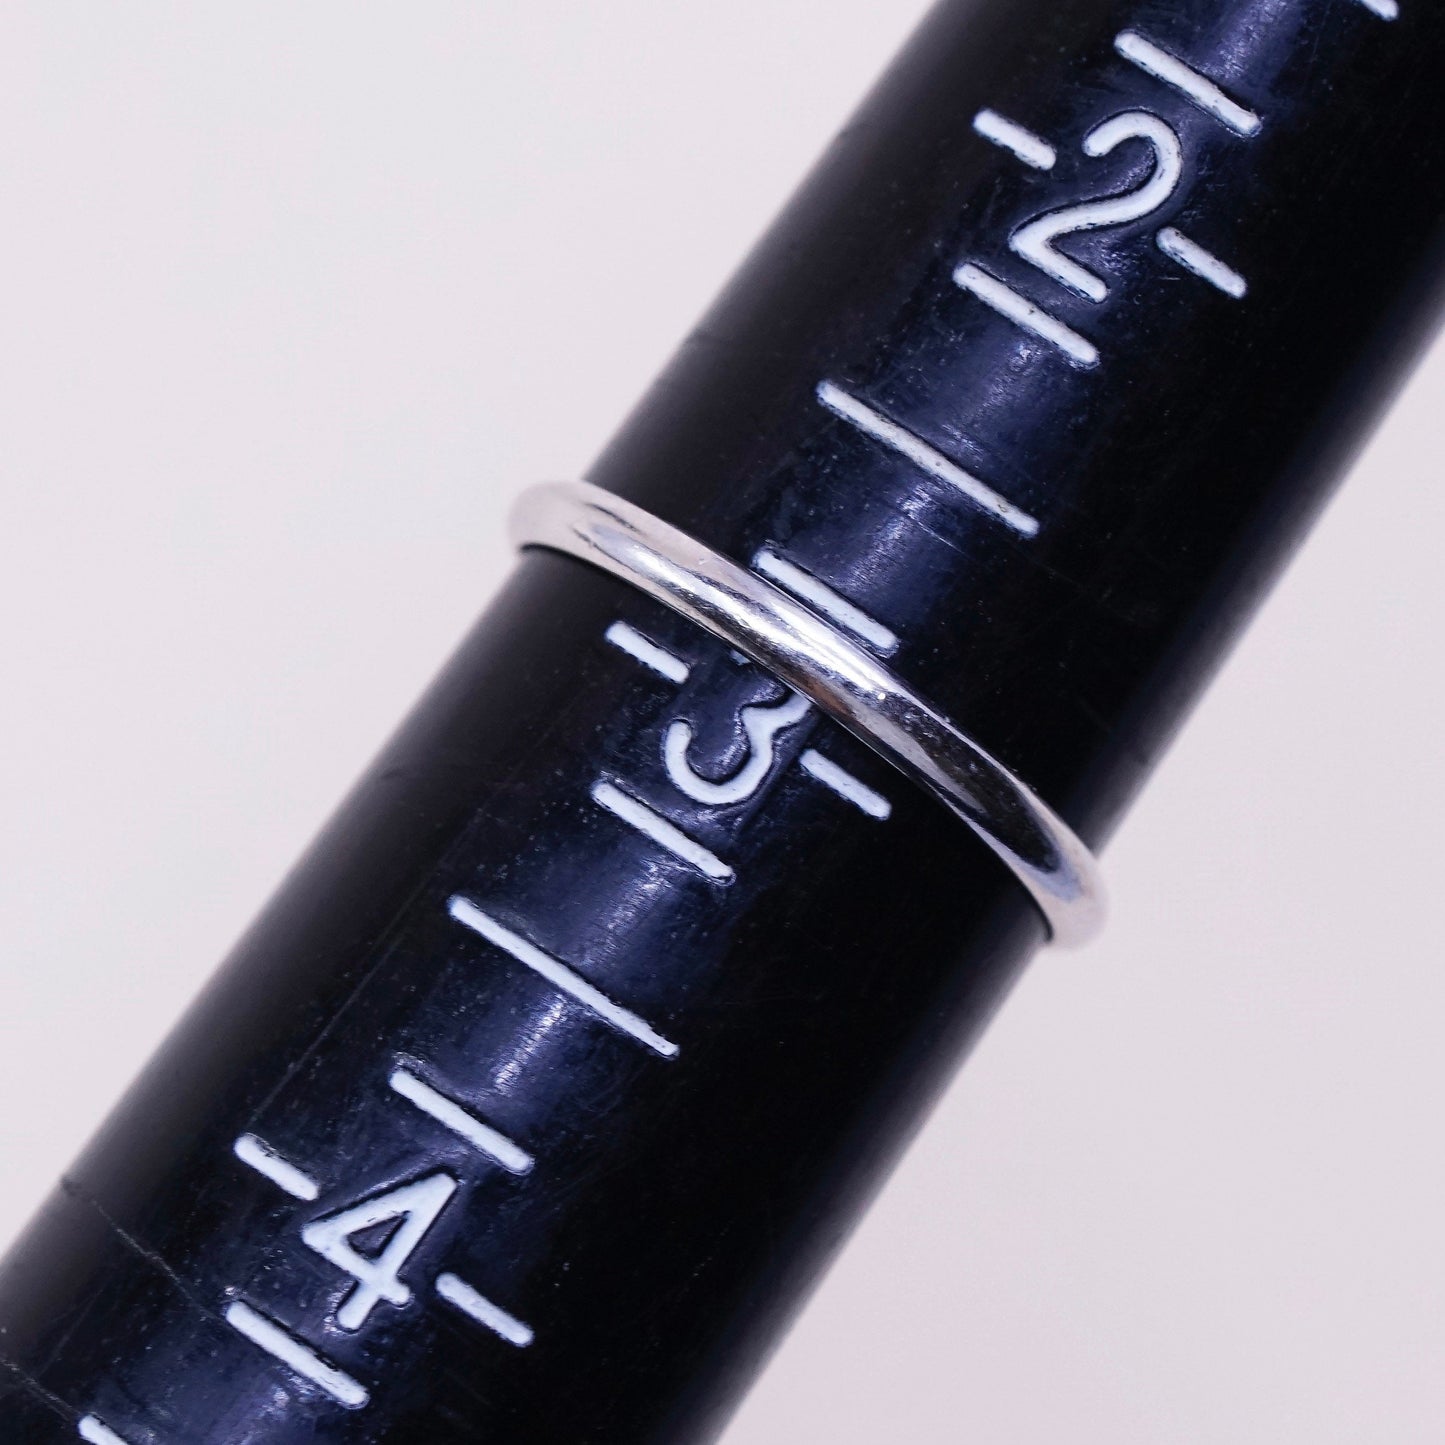 sz 2.75, vtg sterling silver handmade ring, 925 handmade dolphin w/ pink, ocean